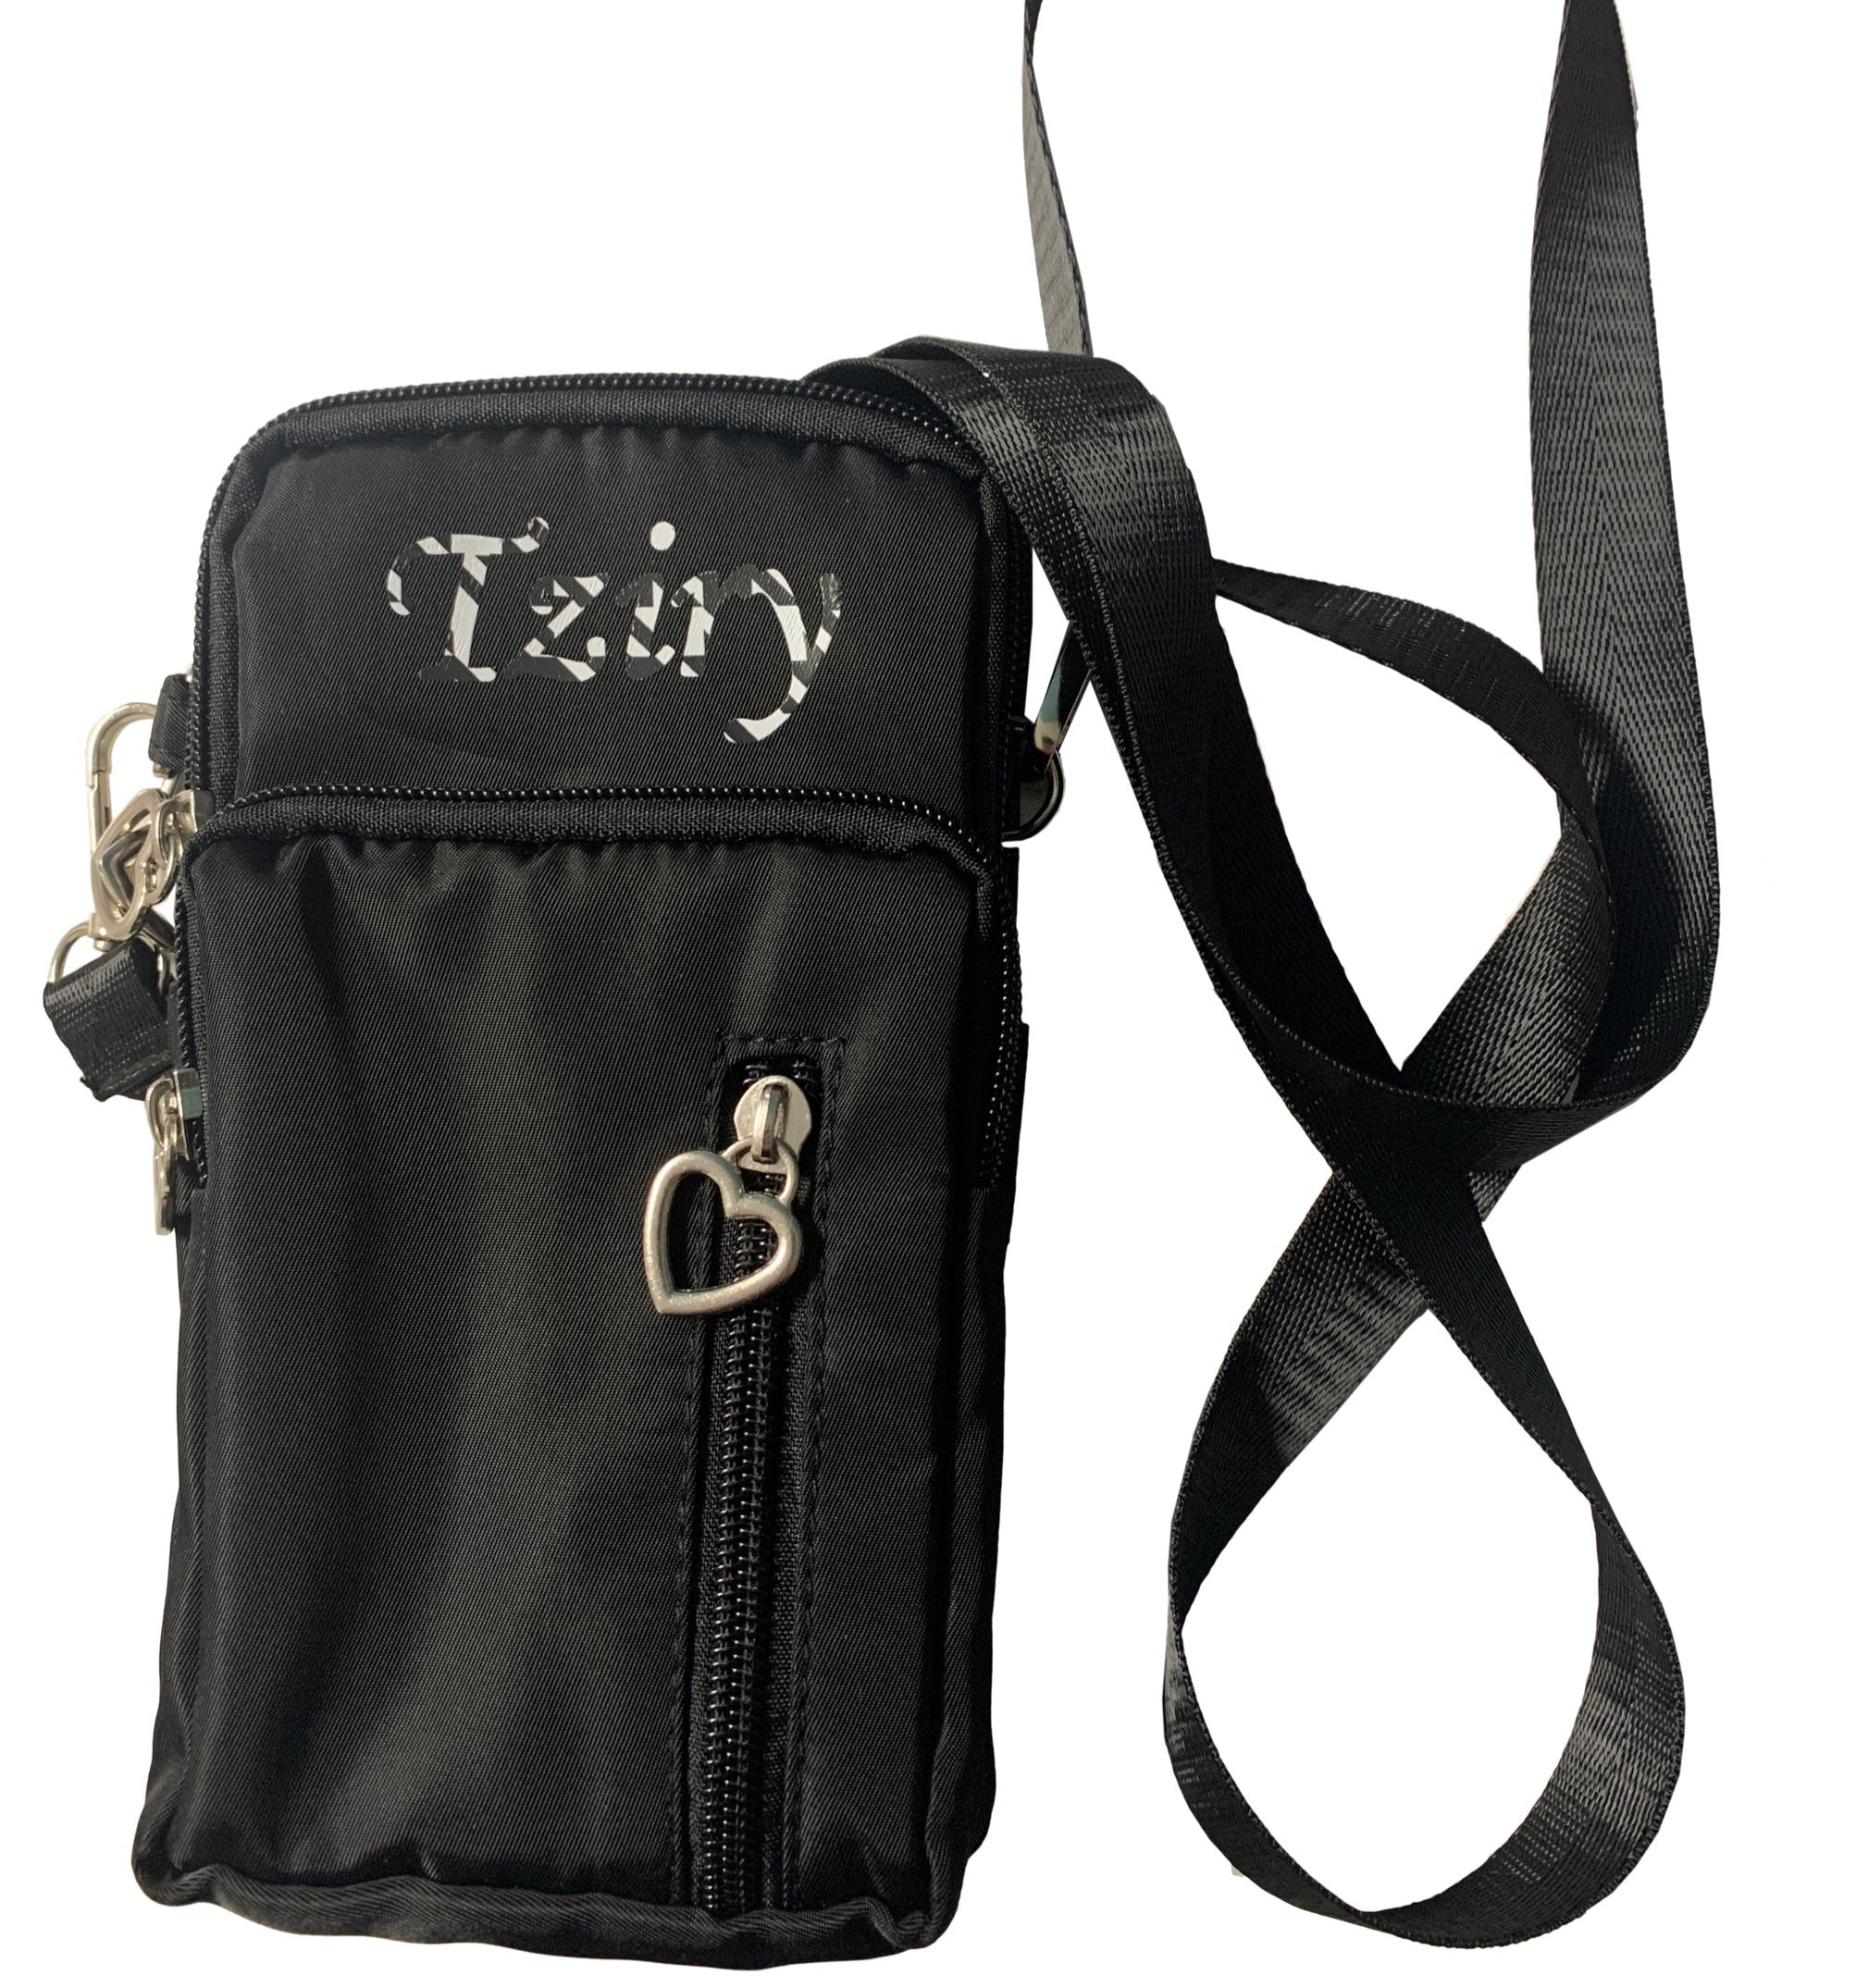 Heart decor square side bag black, Graduation/ Bas Mitzvah/ Birthday gift camp school